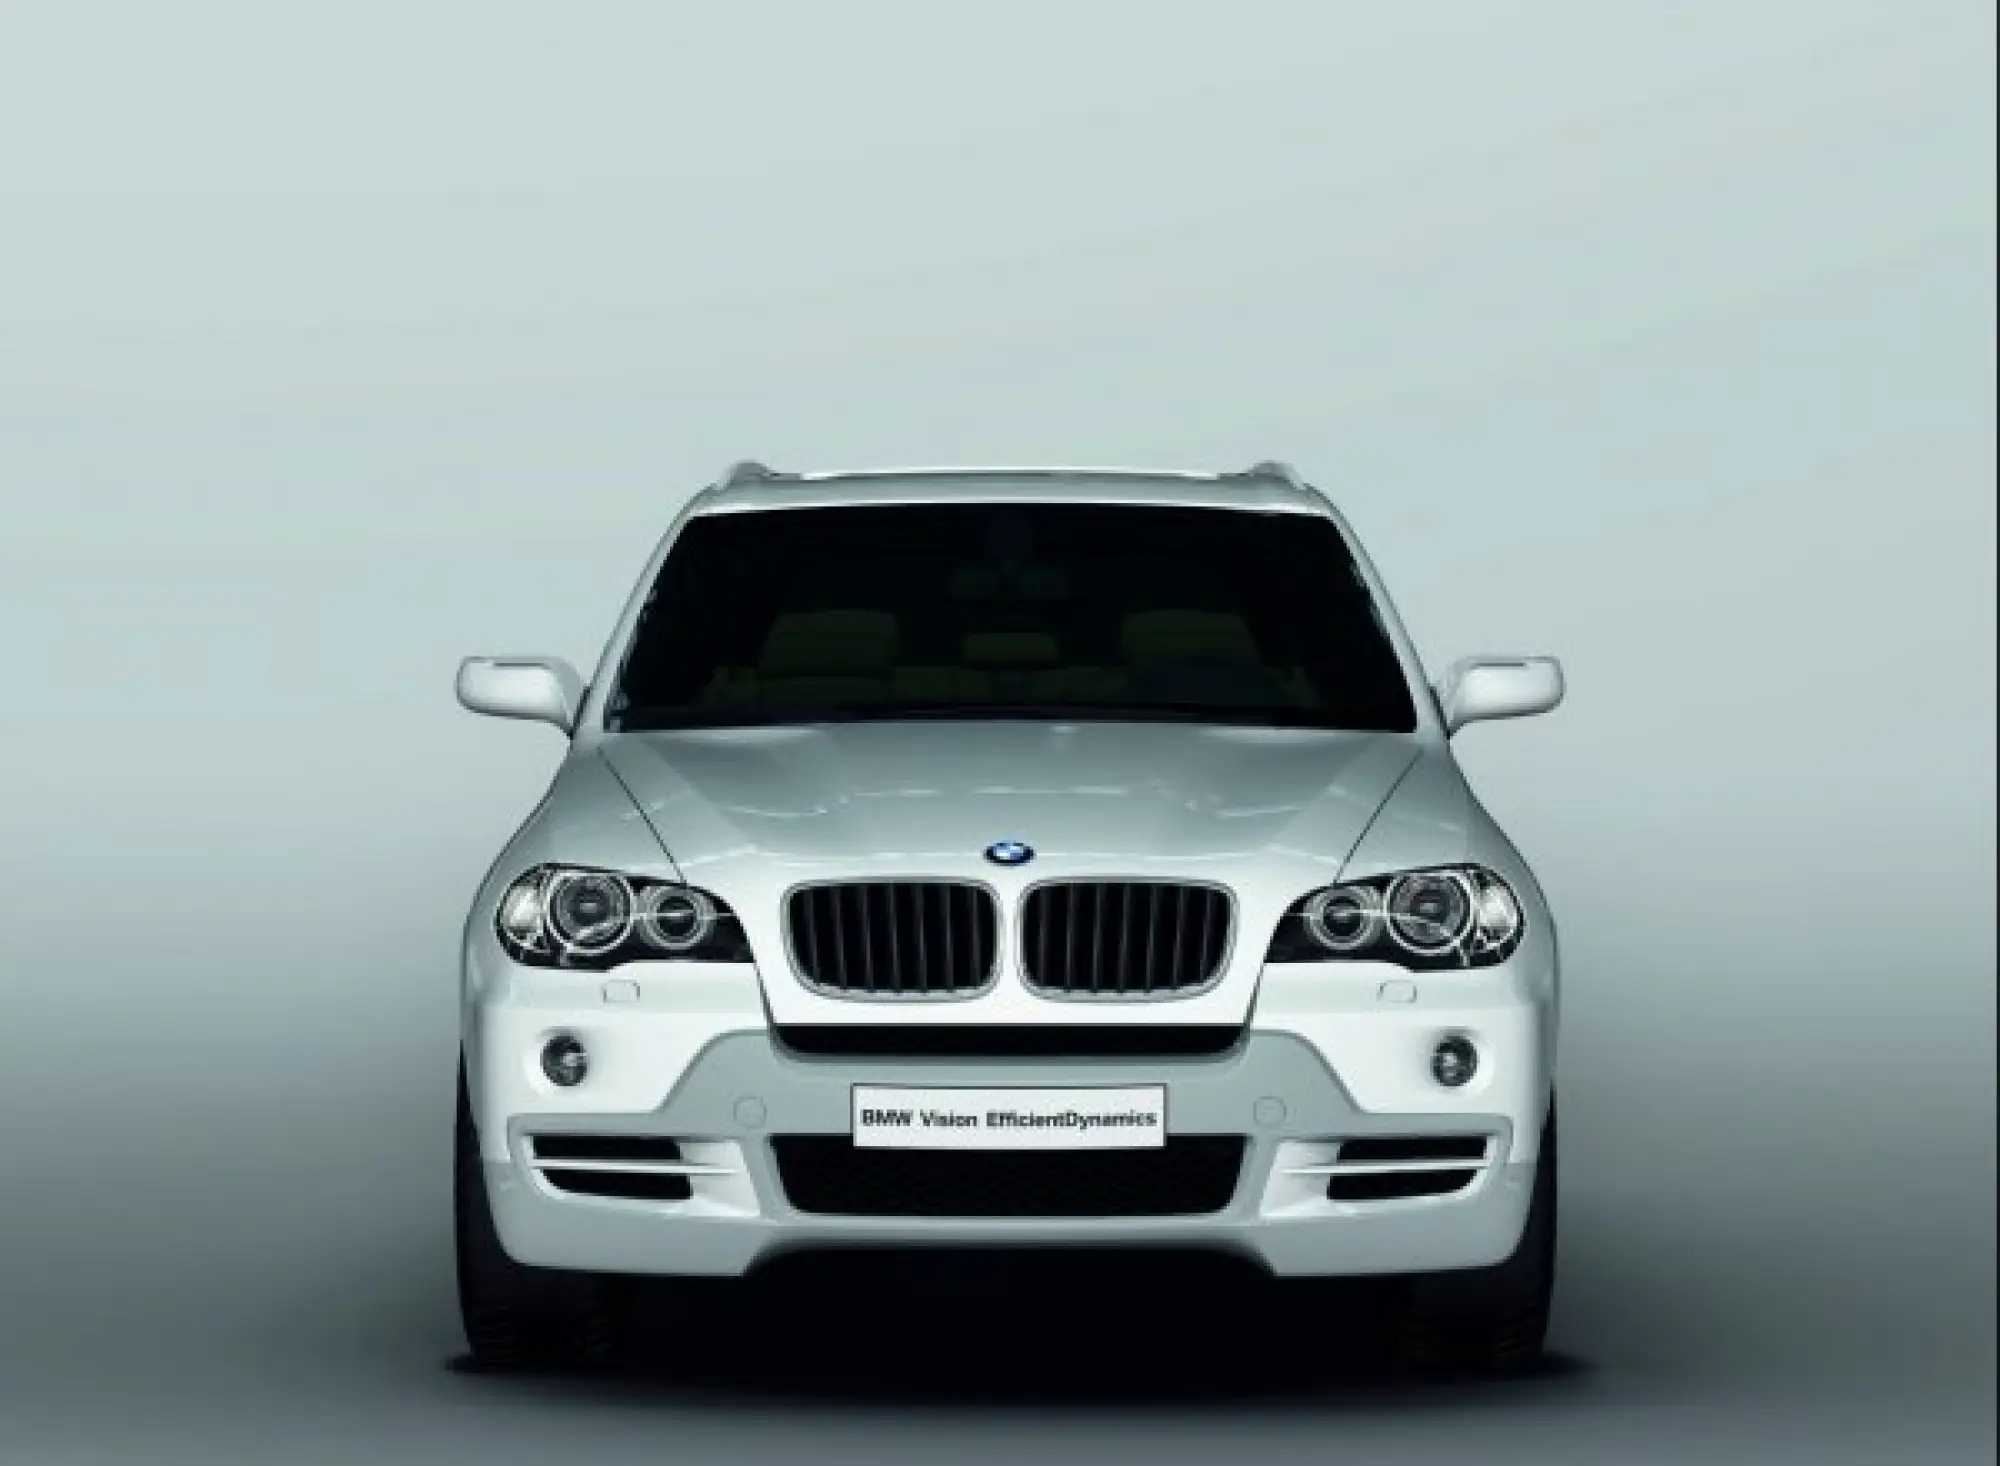 BMW X5 Vision EfficientDynamics concept - 7